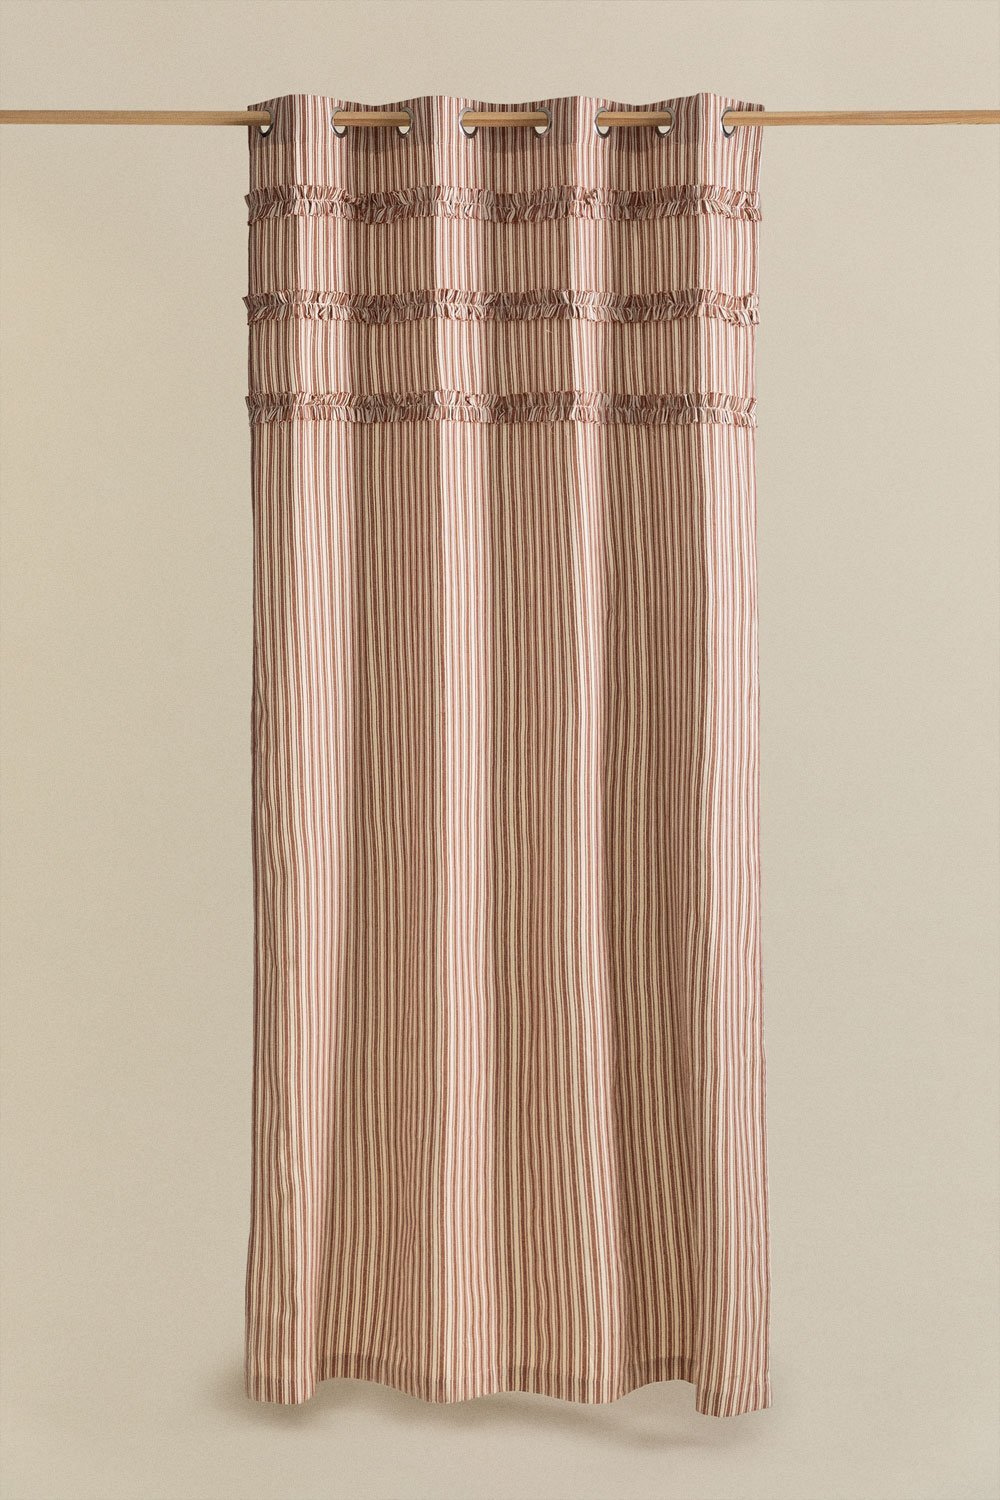 Rideau en coton (140x260 cm) Mogrena, image de la galerie 1